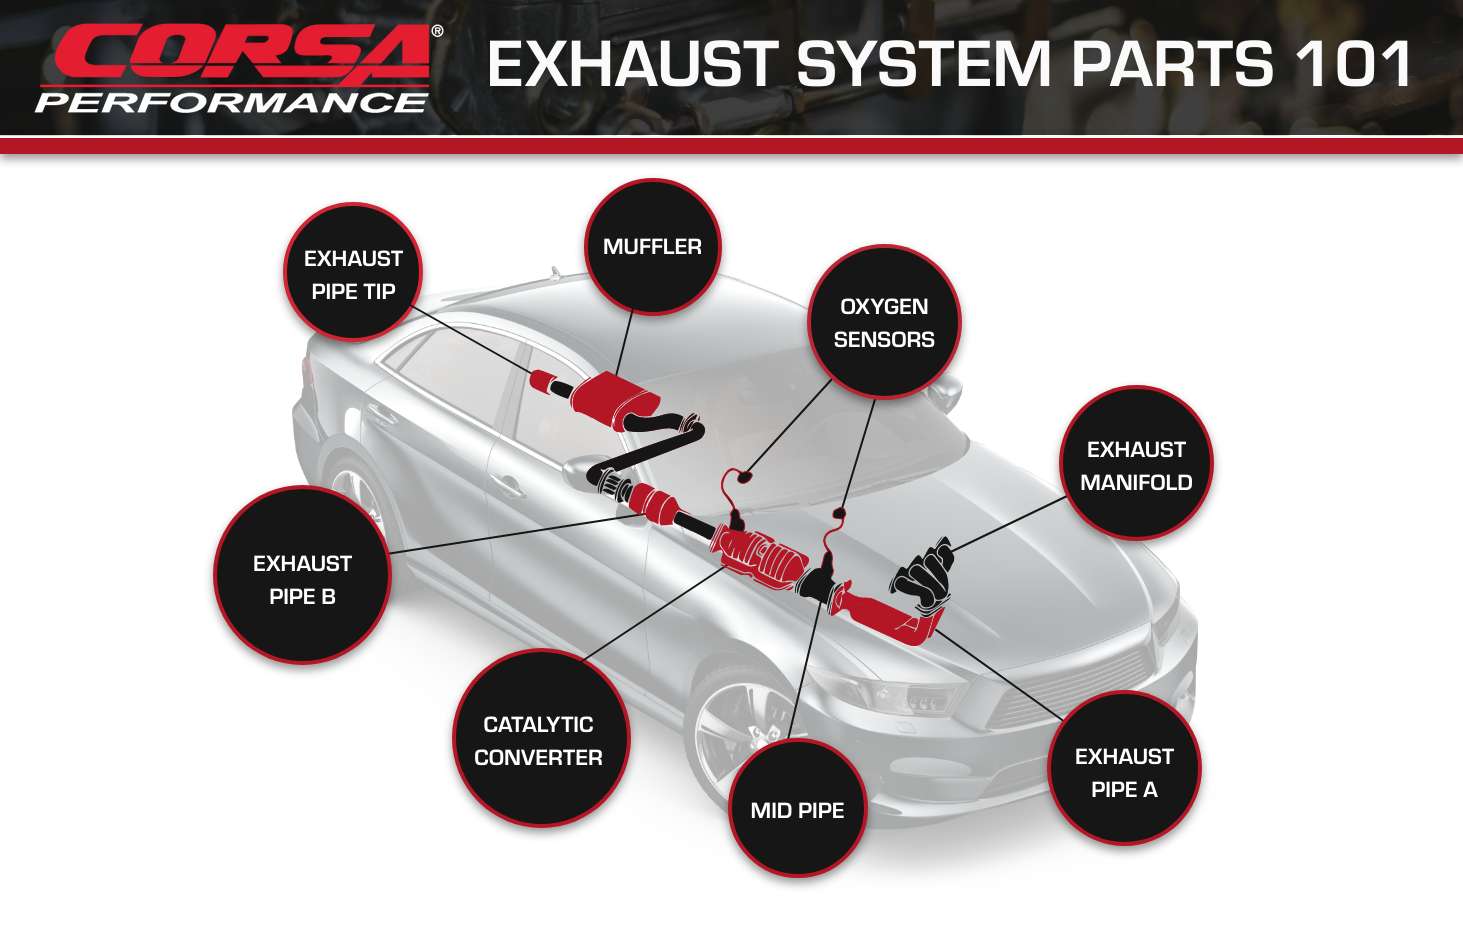 exhaust parts 101 infographic